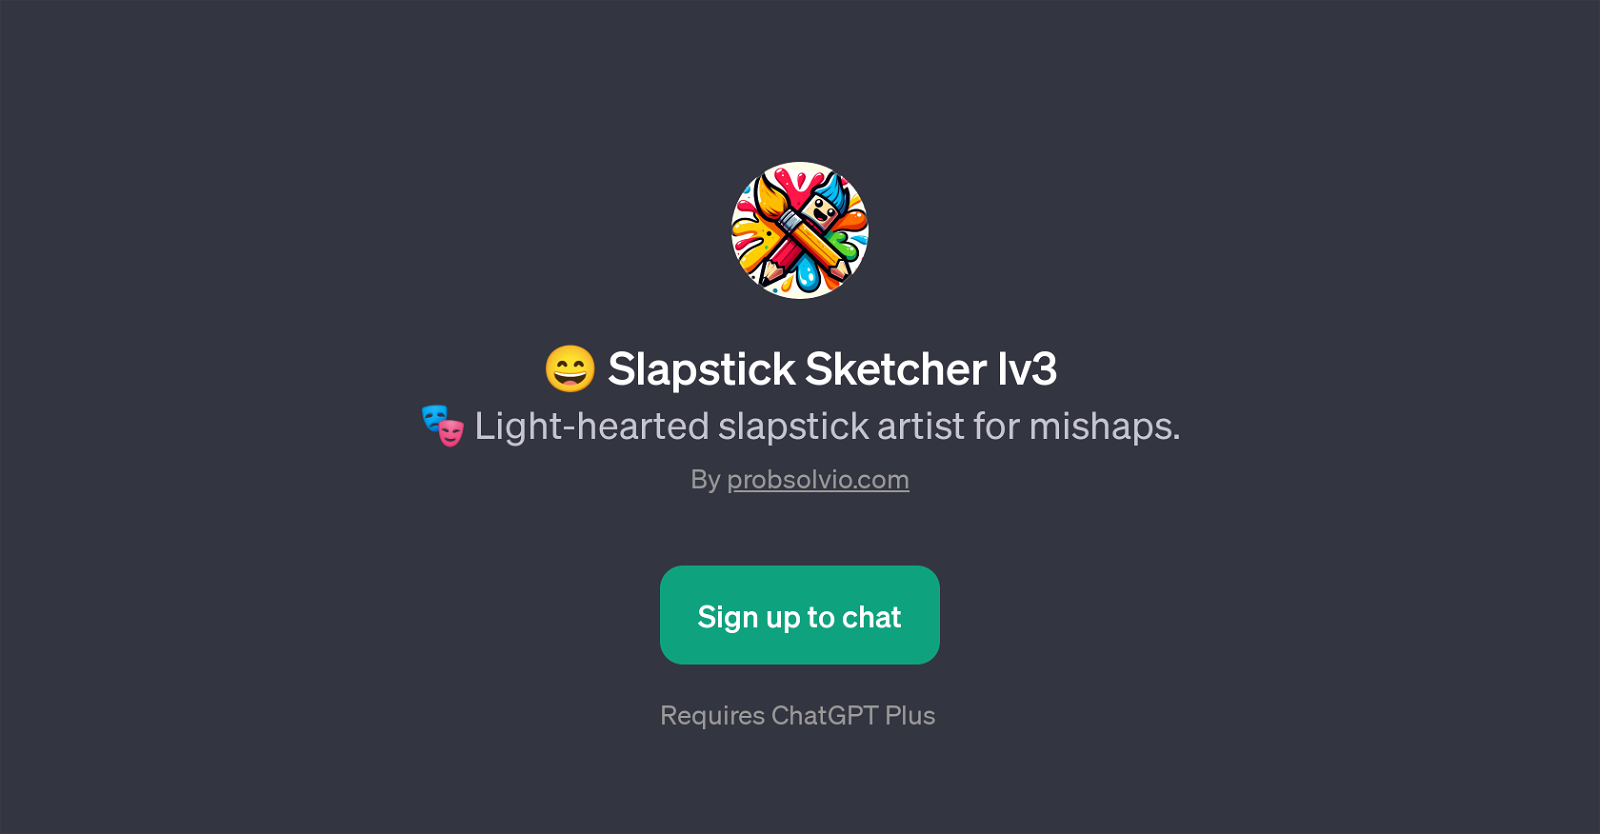 Slapstick Sketcher lv3 website